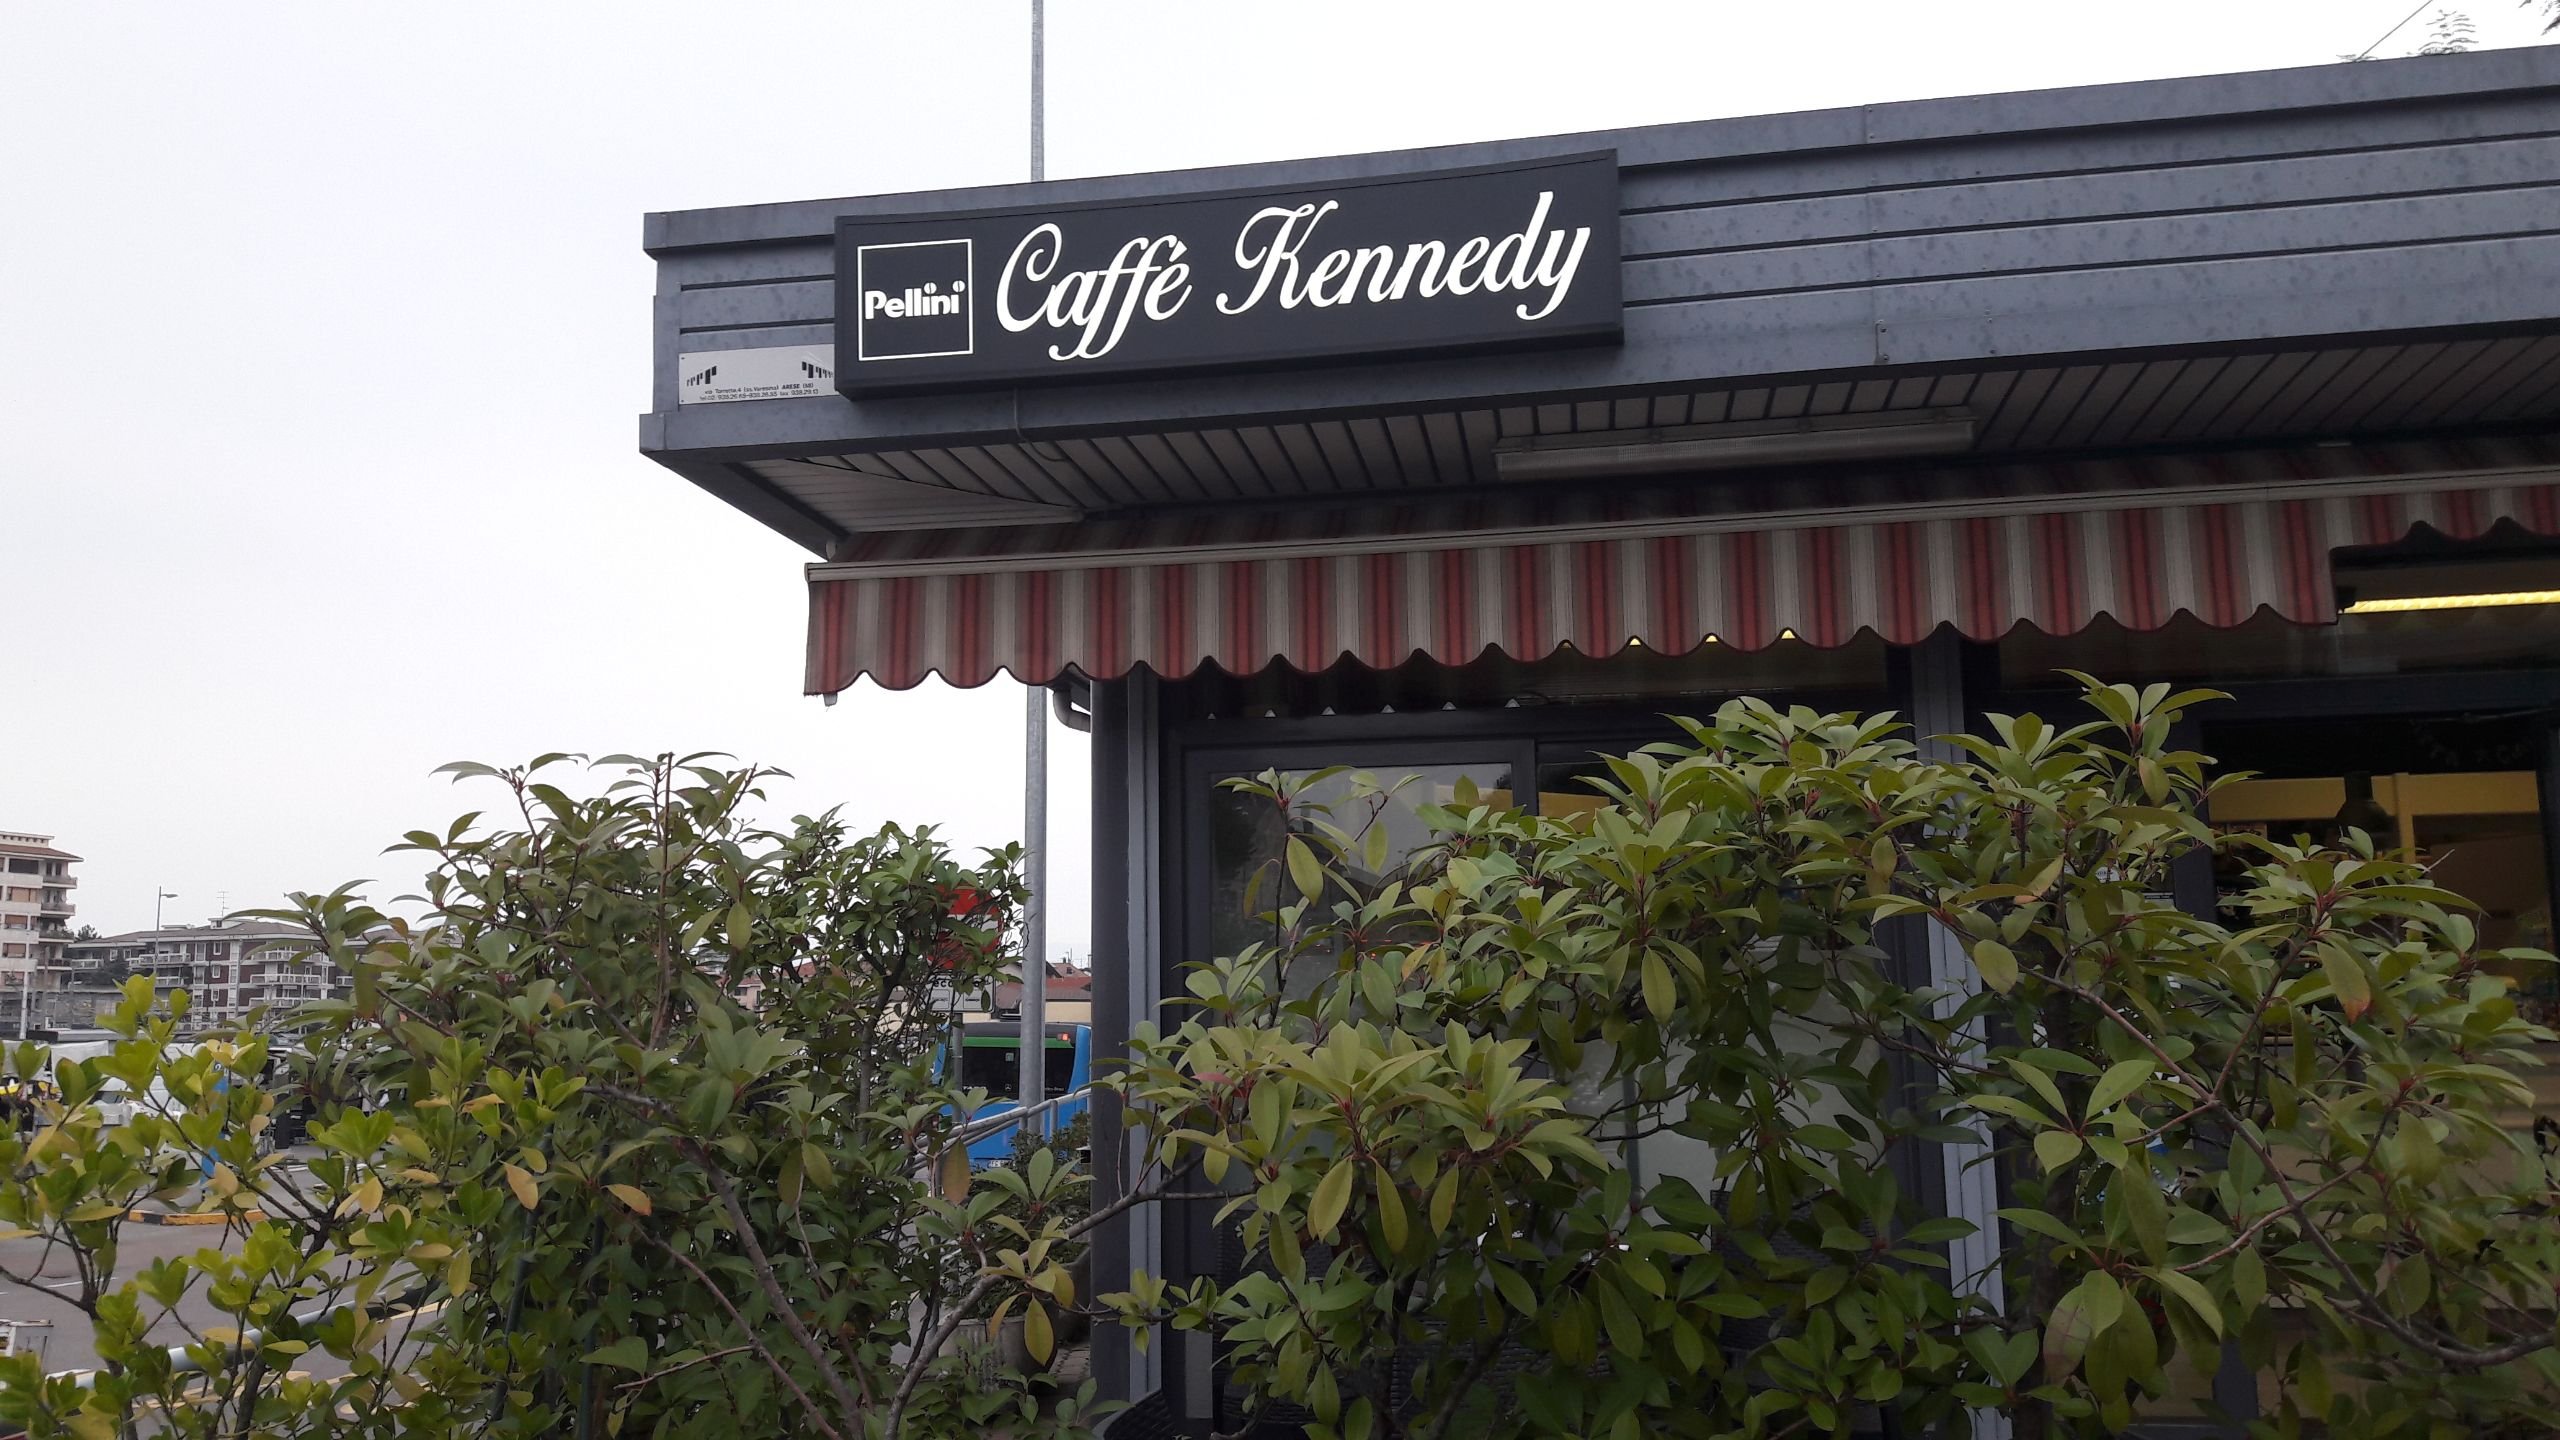 Caffe Kennedy, Varese